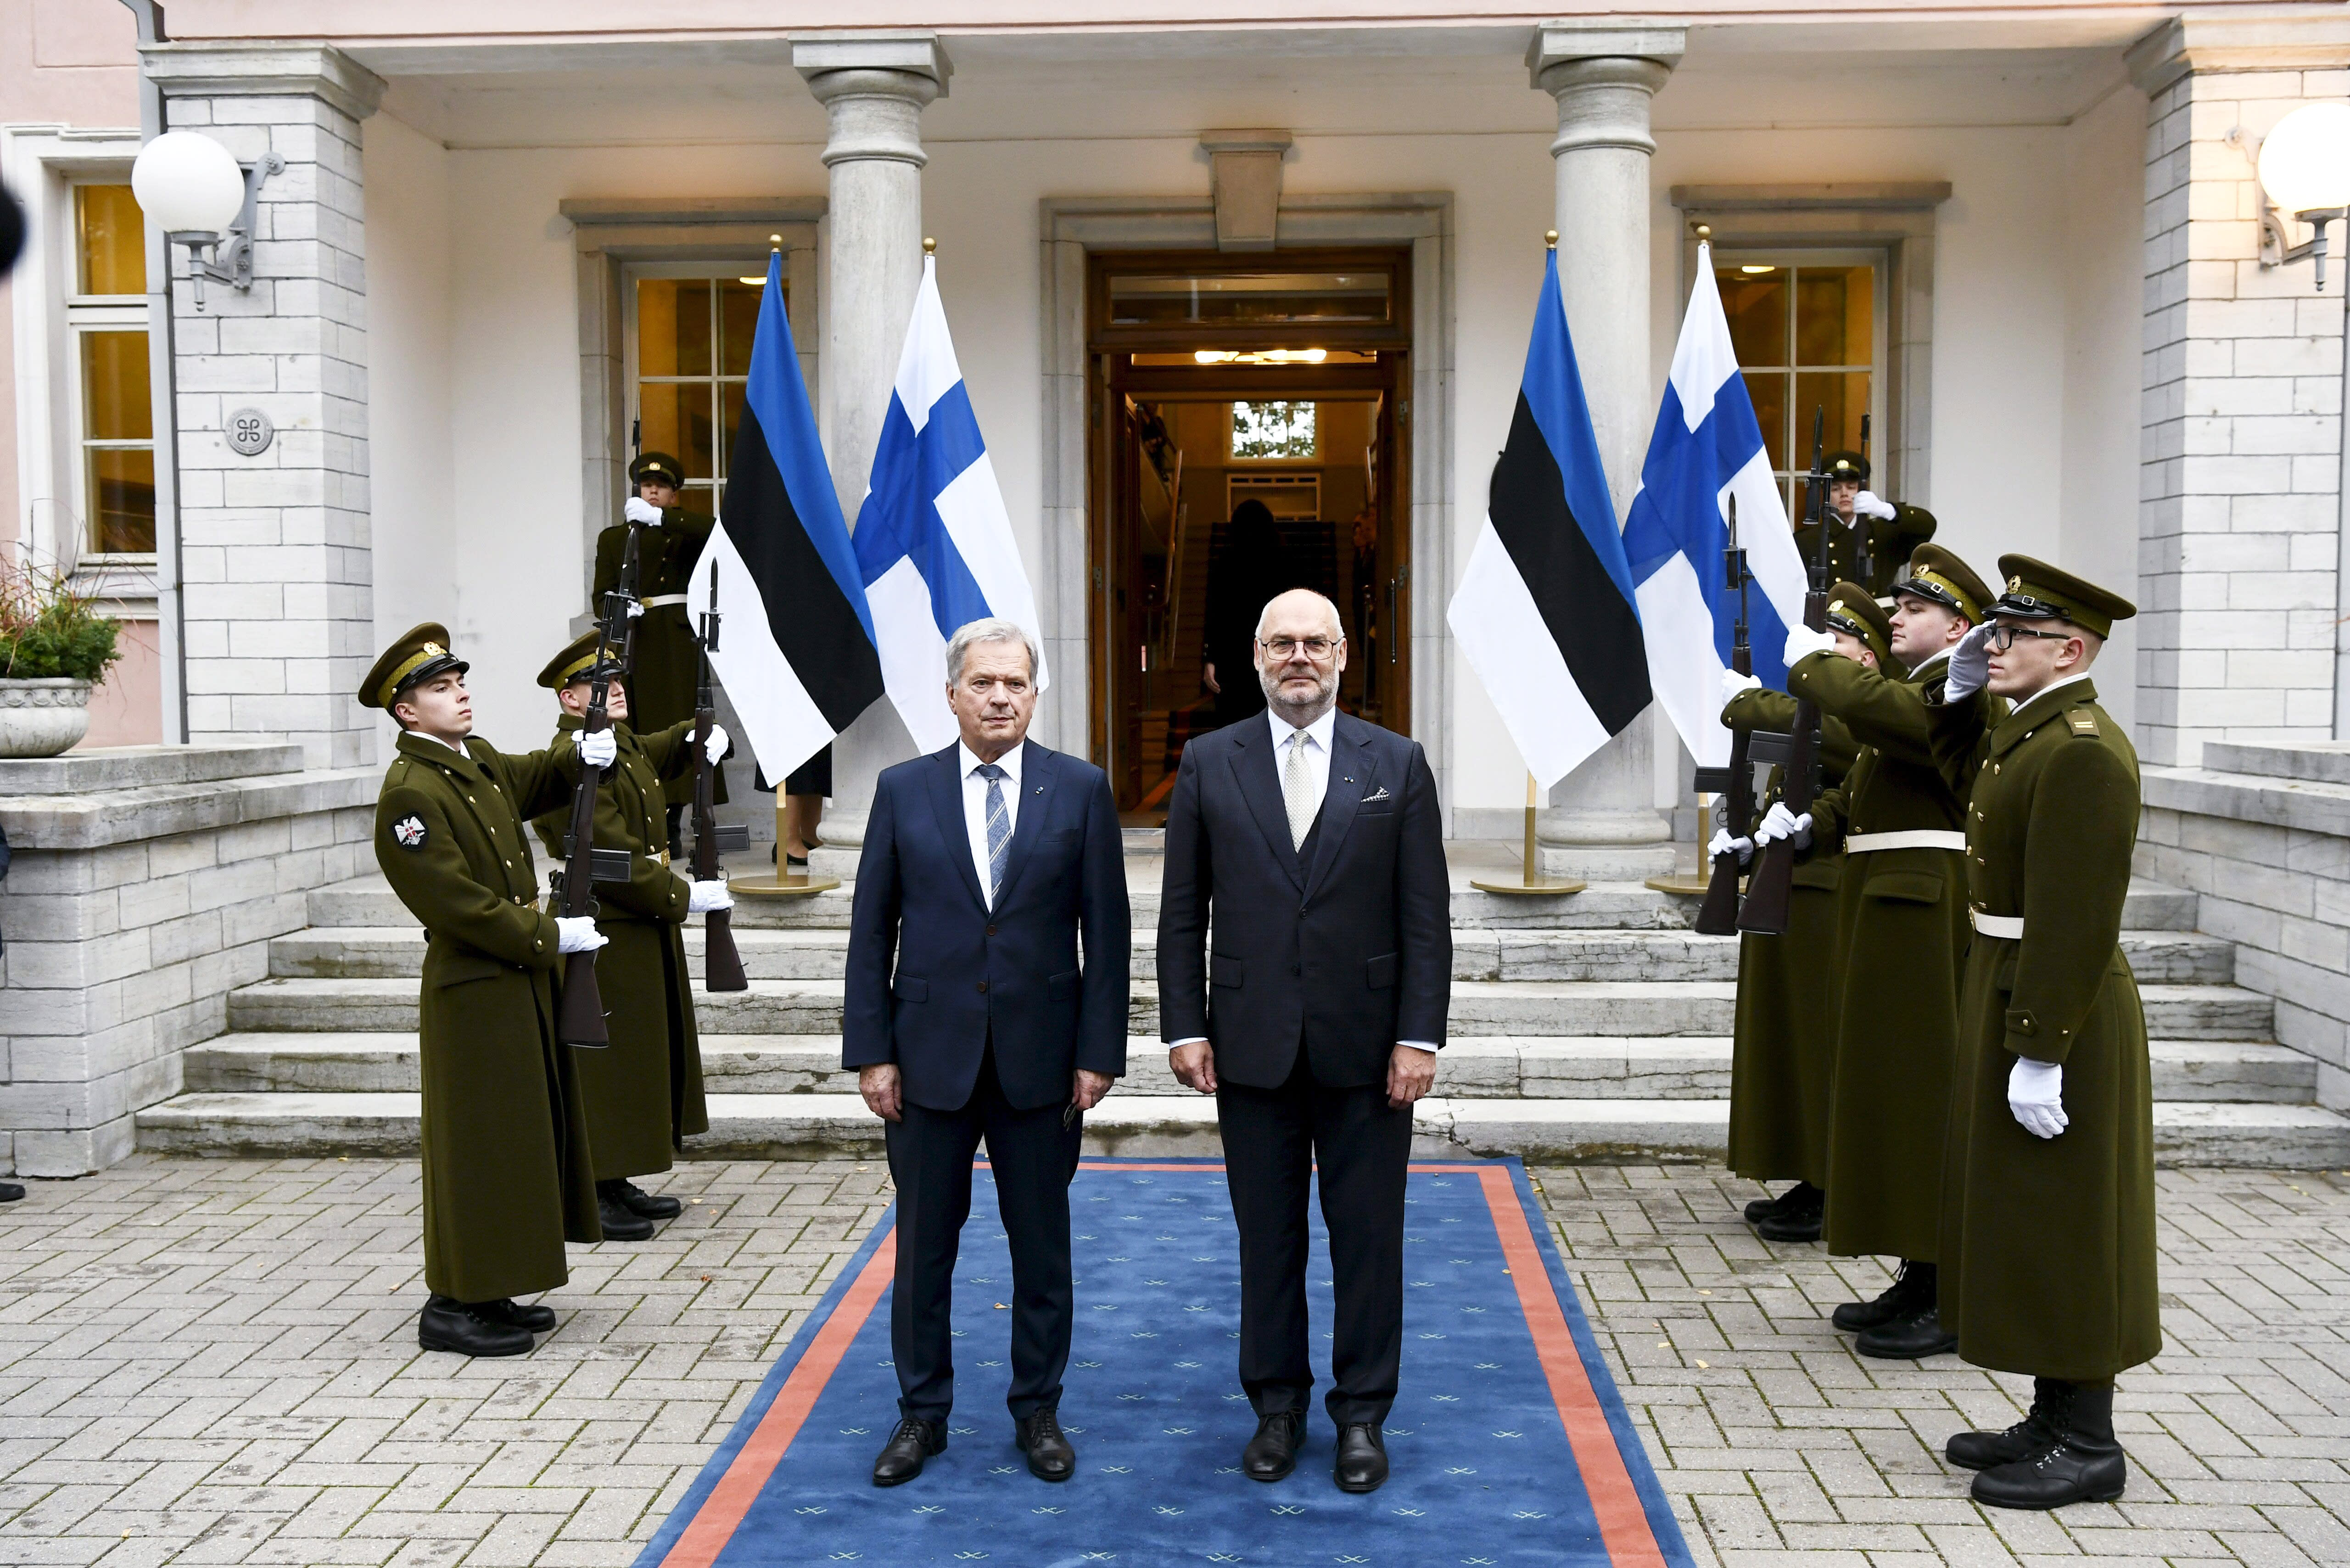 The presidents of Finland and Estonia discuss Ukraine, NATO and energy